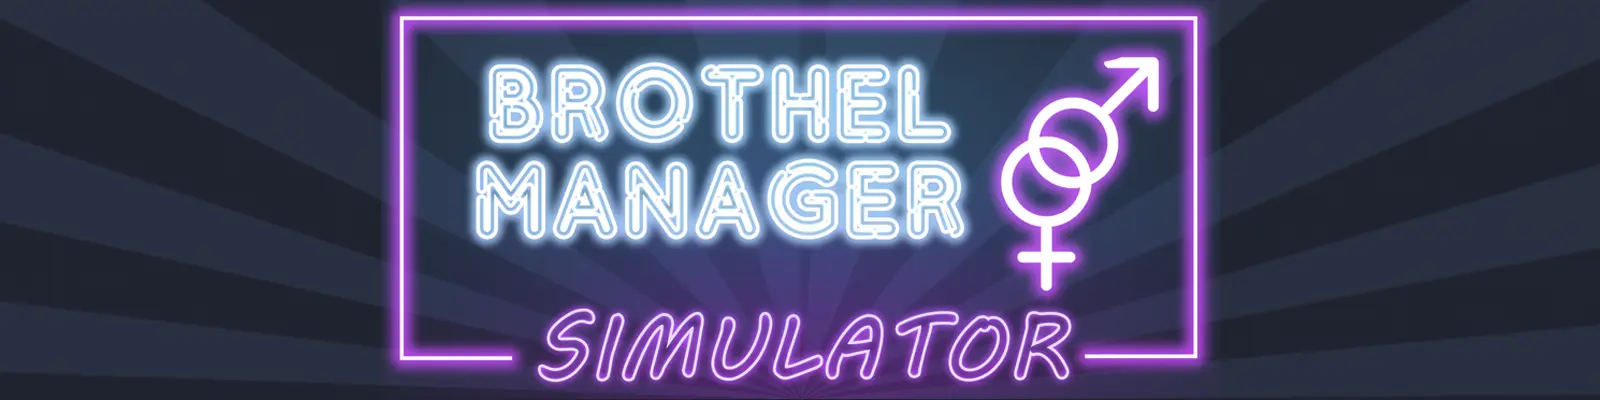 Brothel Manager Simulator main image